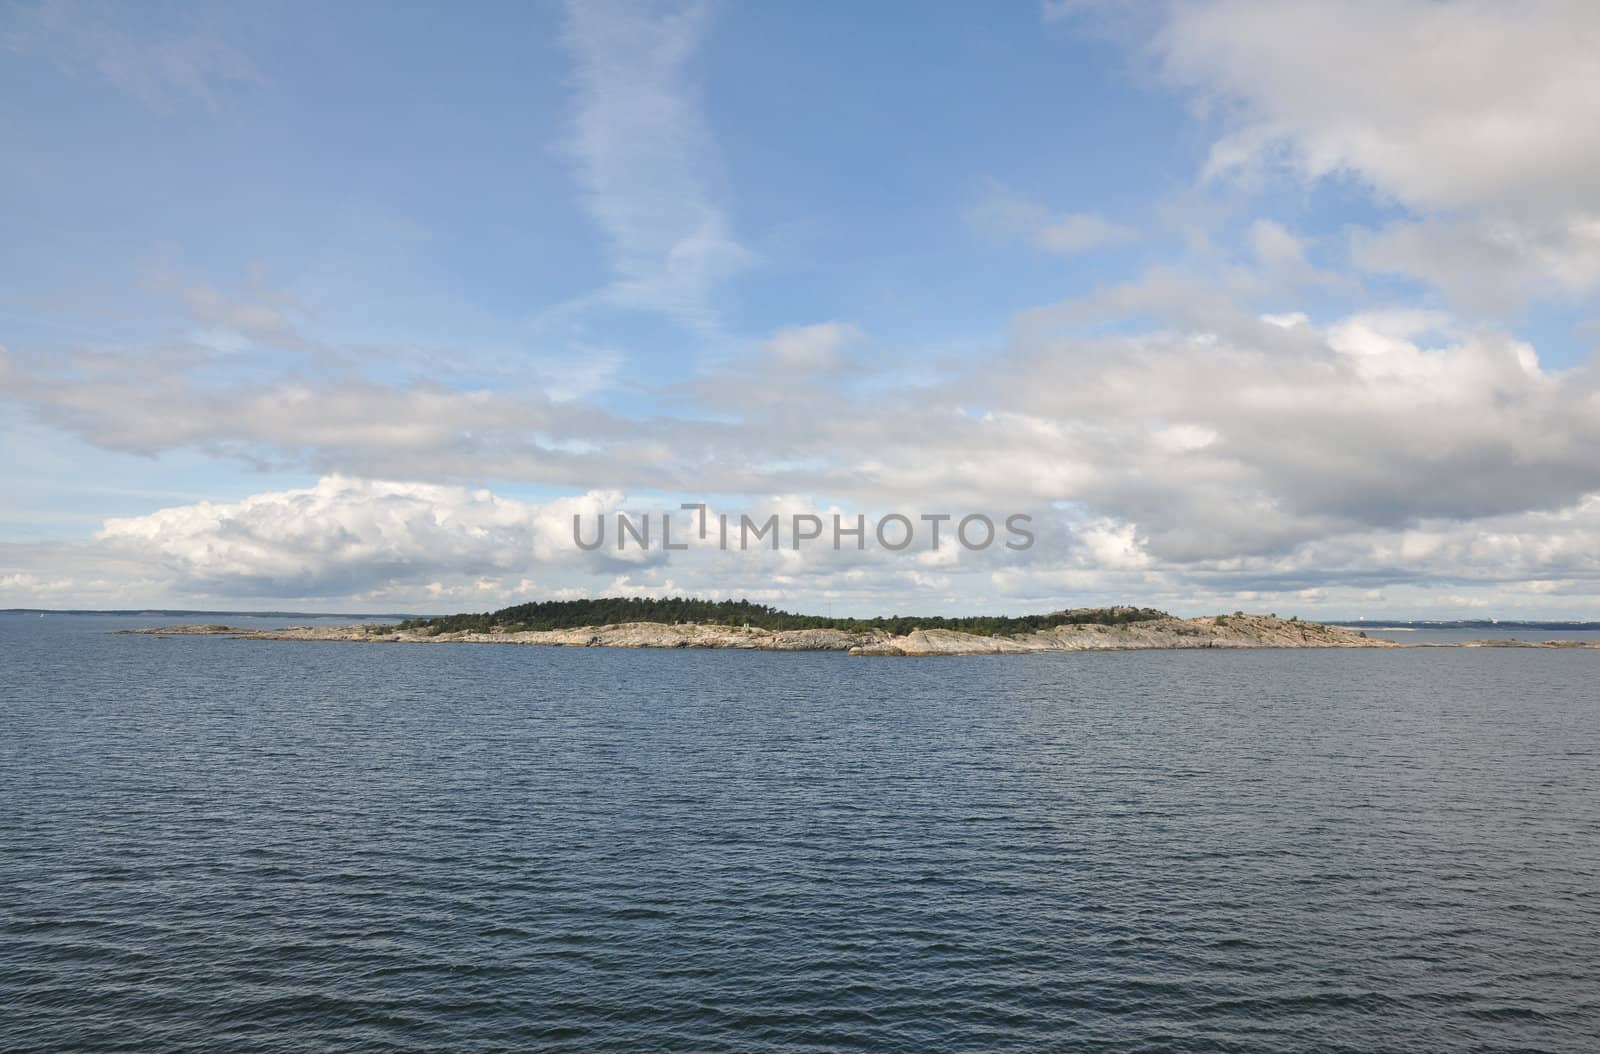 Deserted island in the baltic sea.